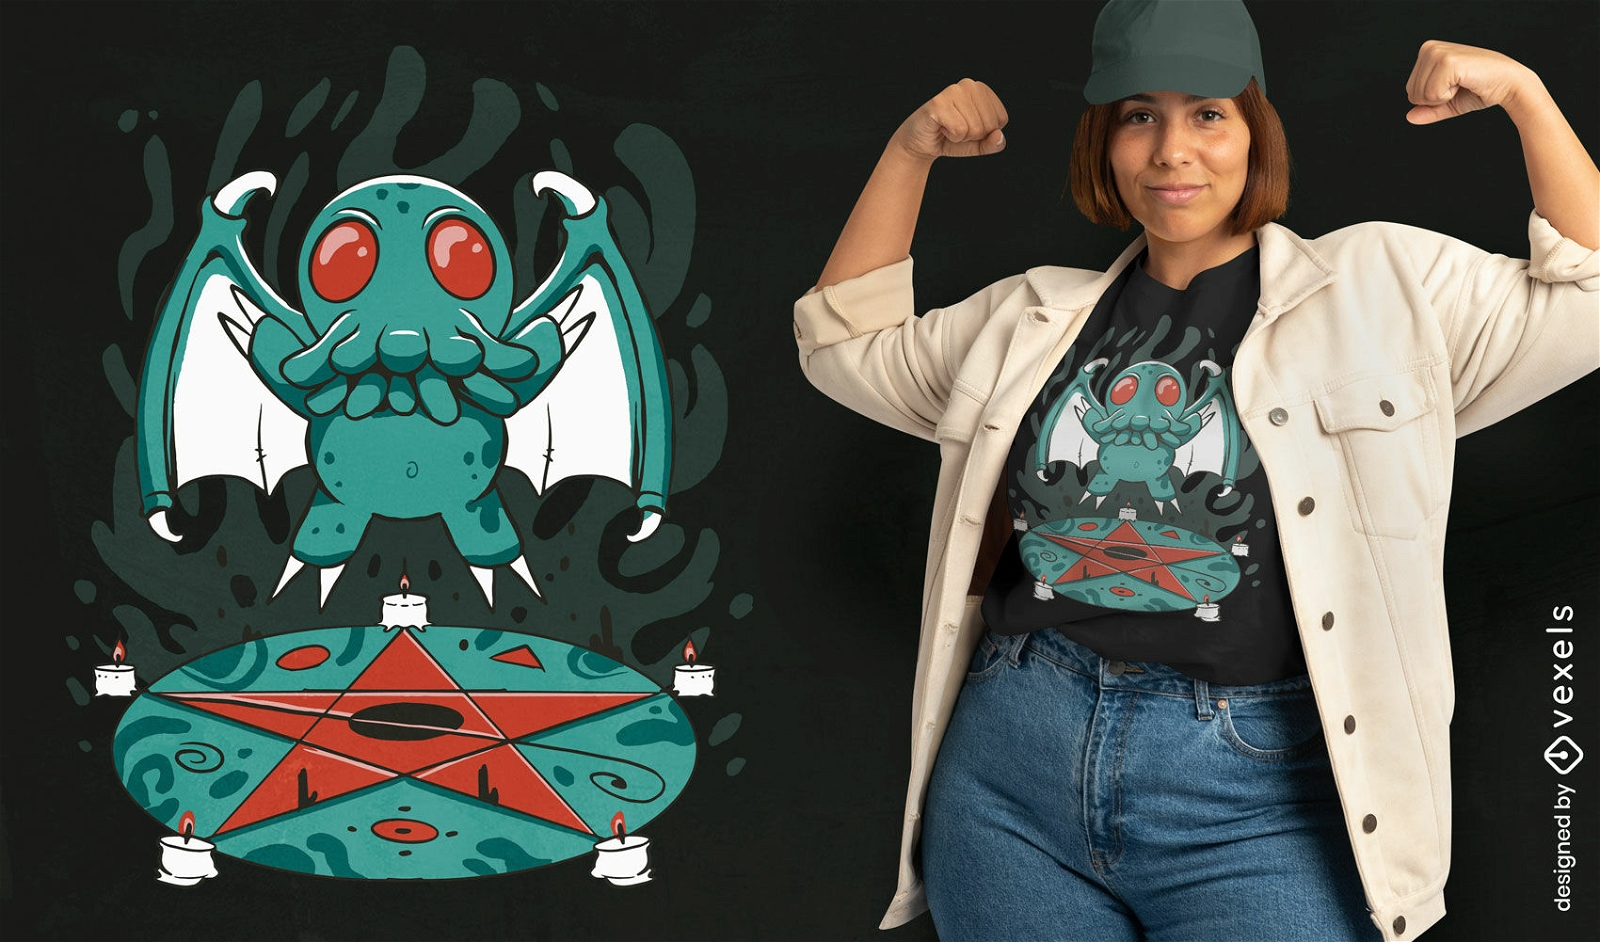 Dark creature ritual t-shirt design